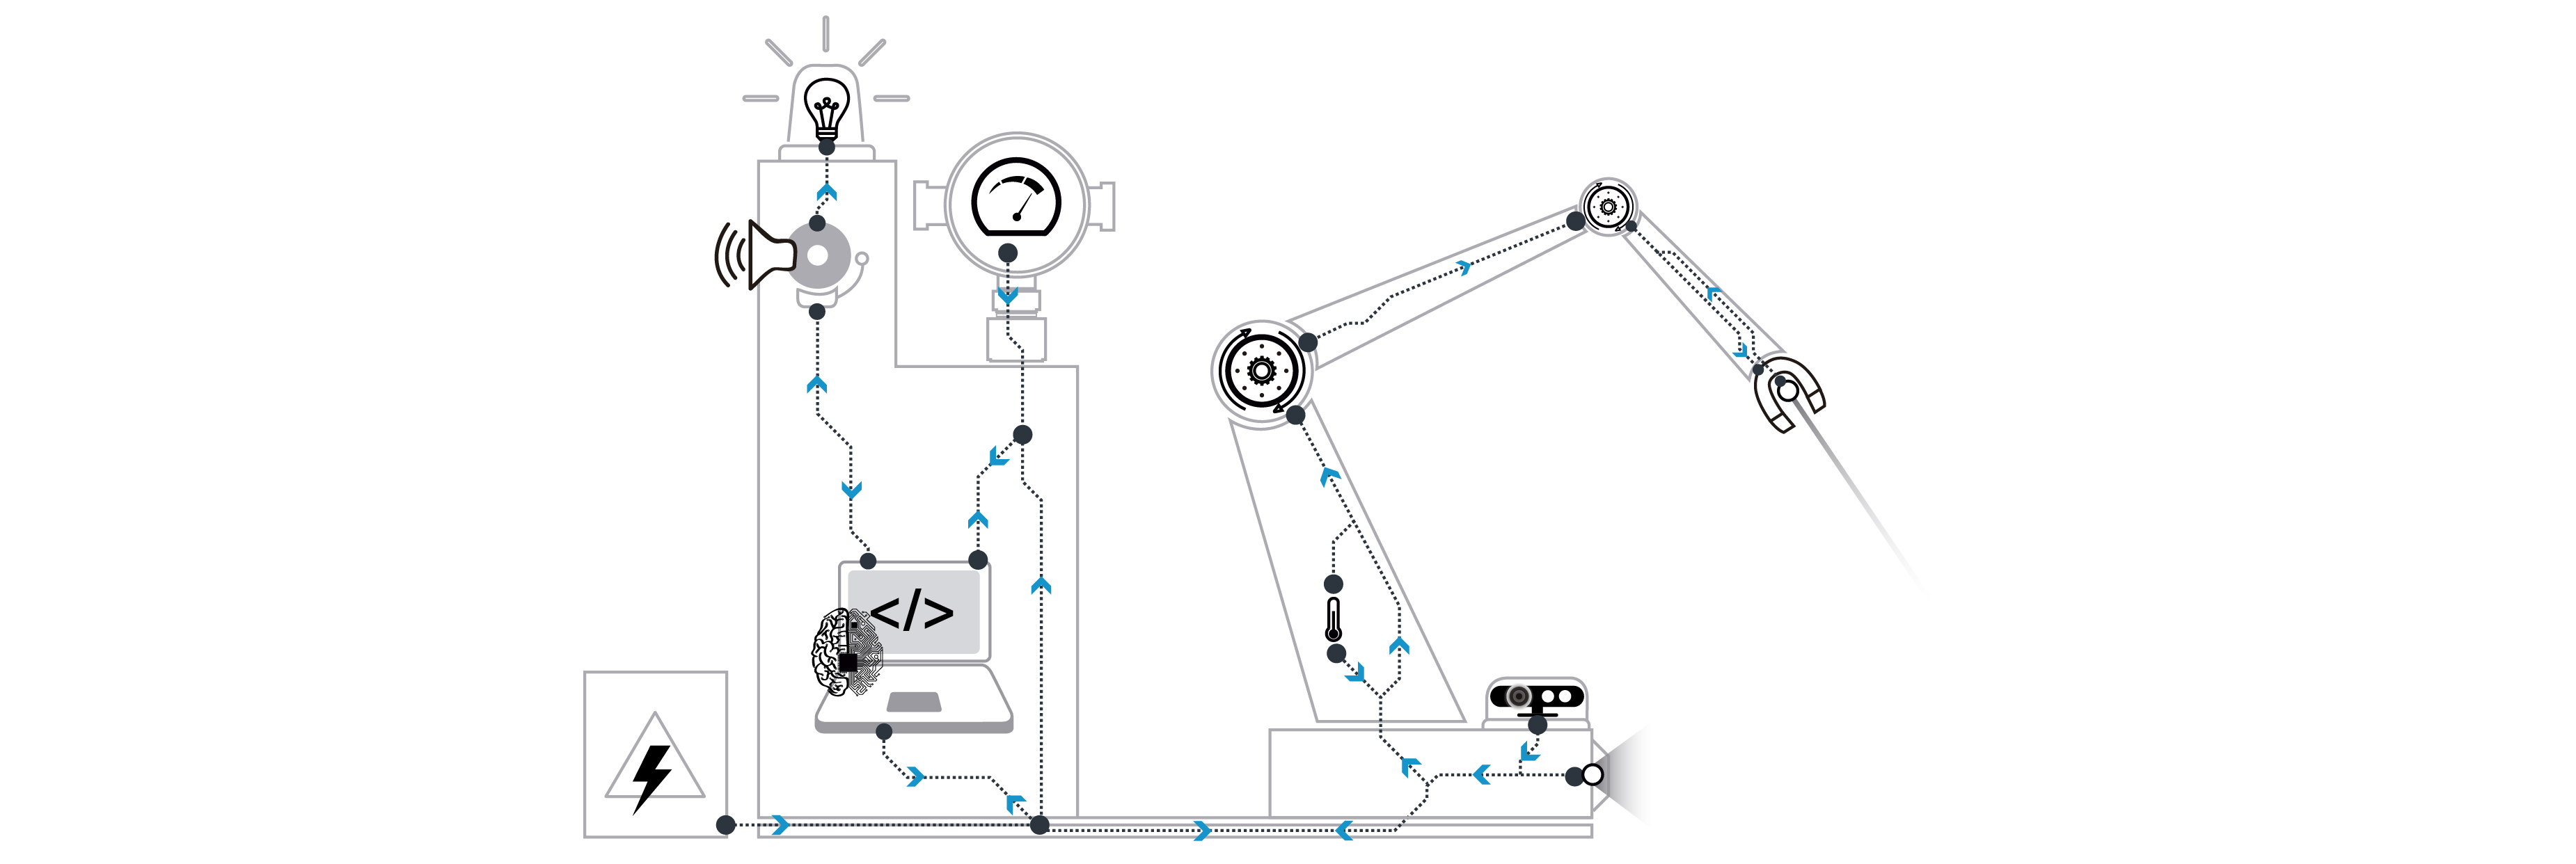 Introducing the Hardware Robot Information Model | by Víctor Mayoral Vilches | HackerNoon.com | Medium